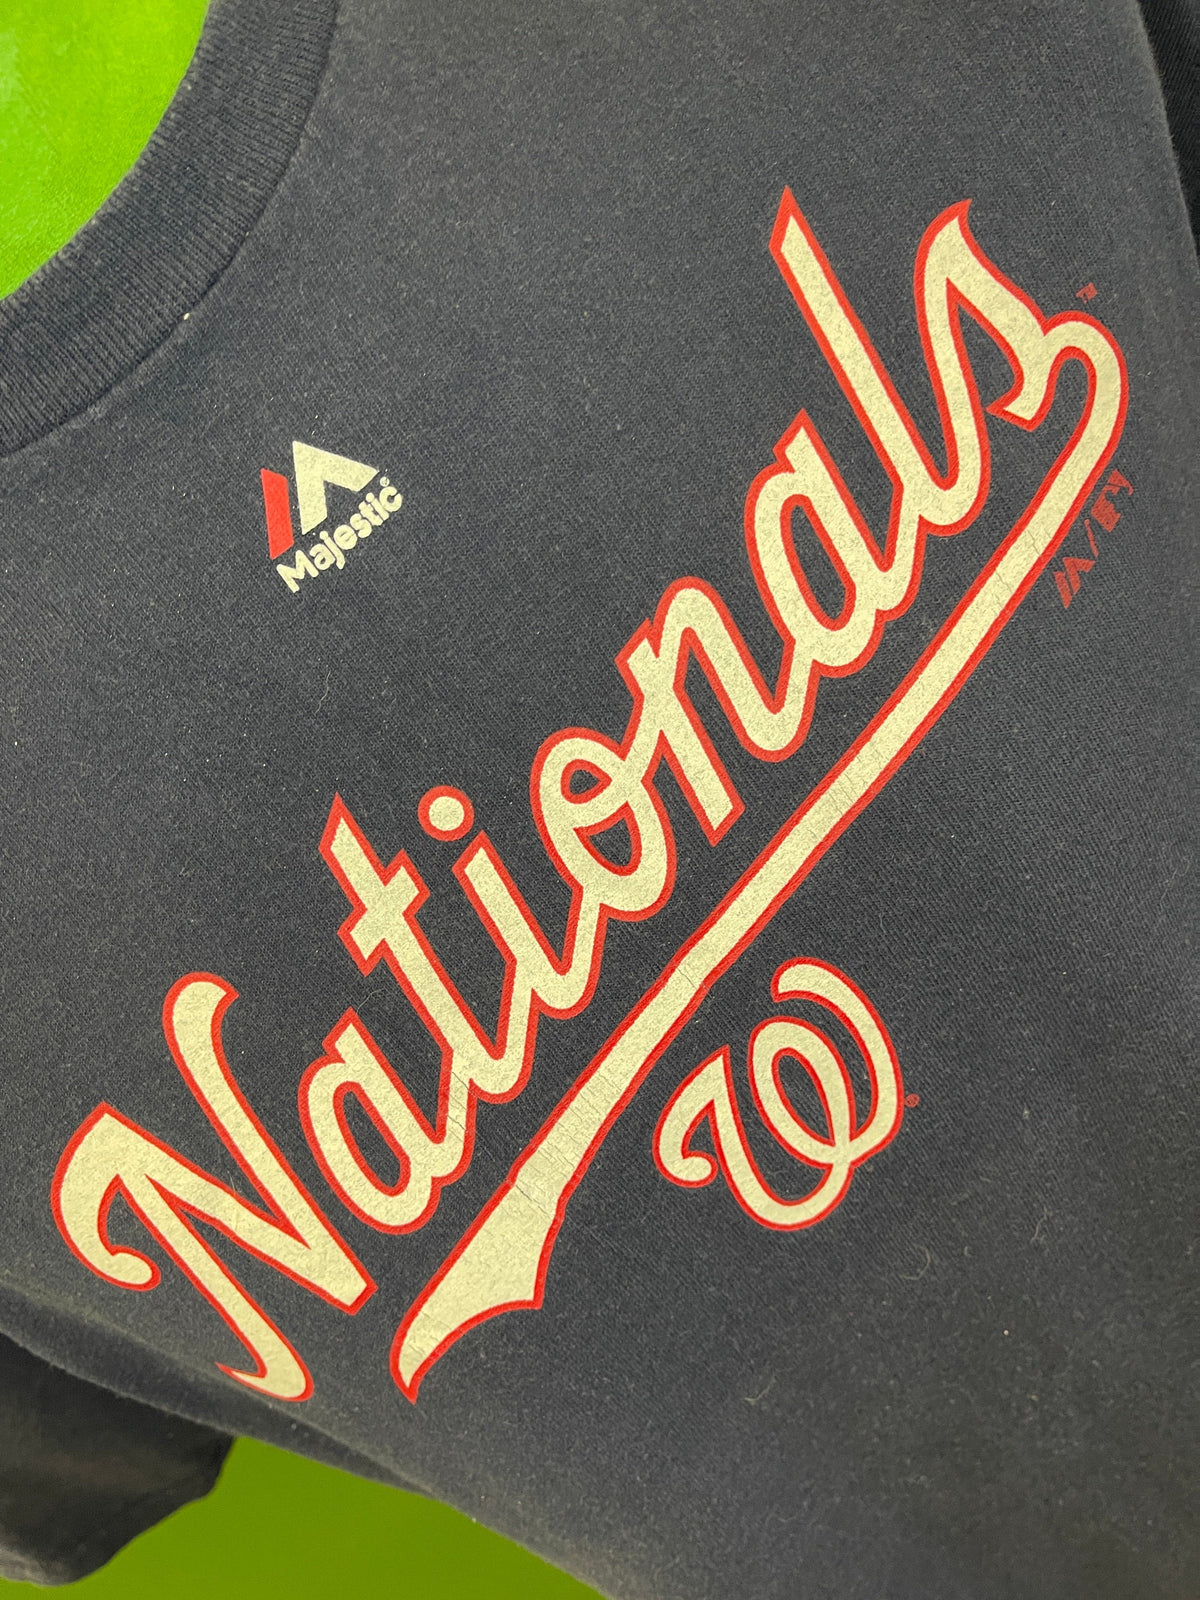 MLB Washington Nationals Majestic 100% Cotton T-Shirt Men's Large